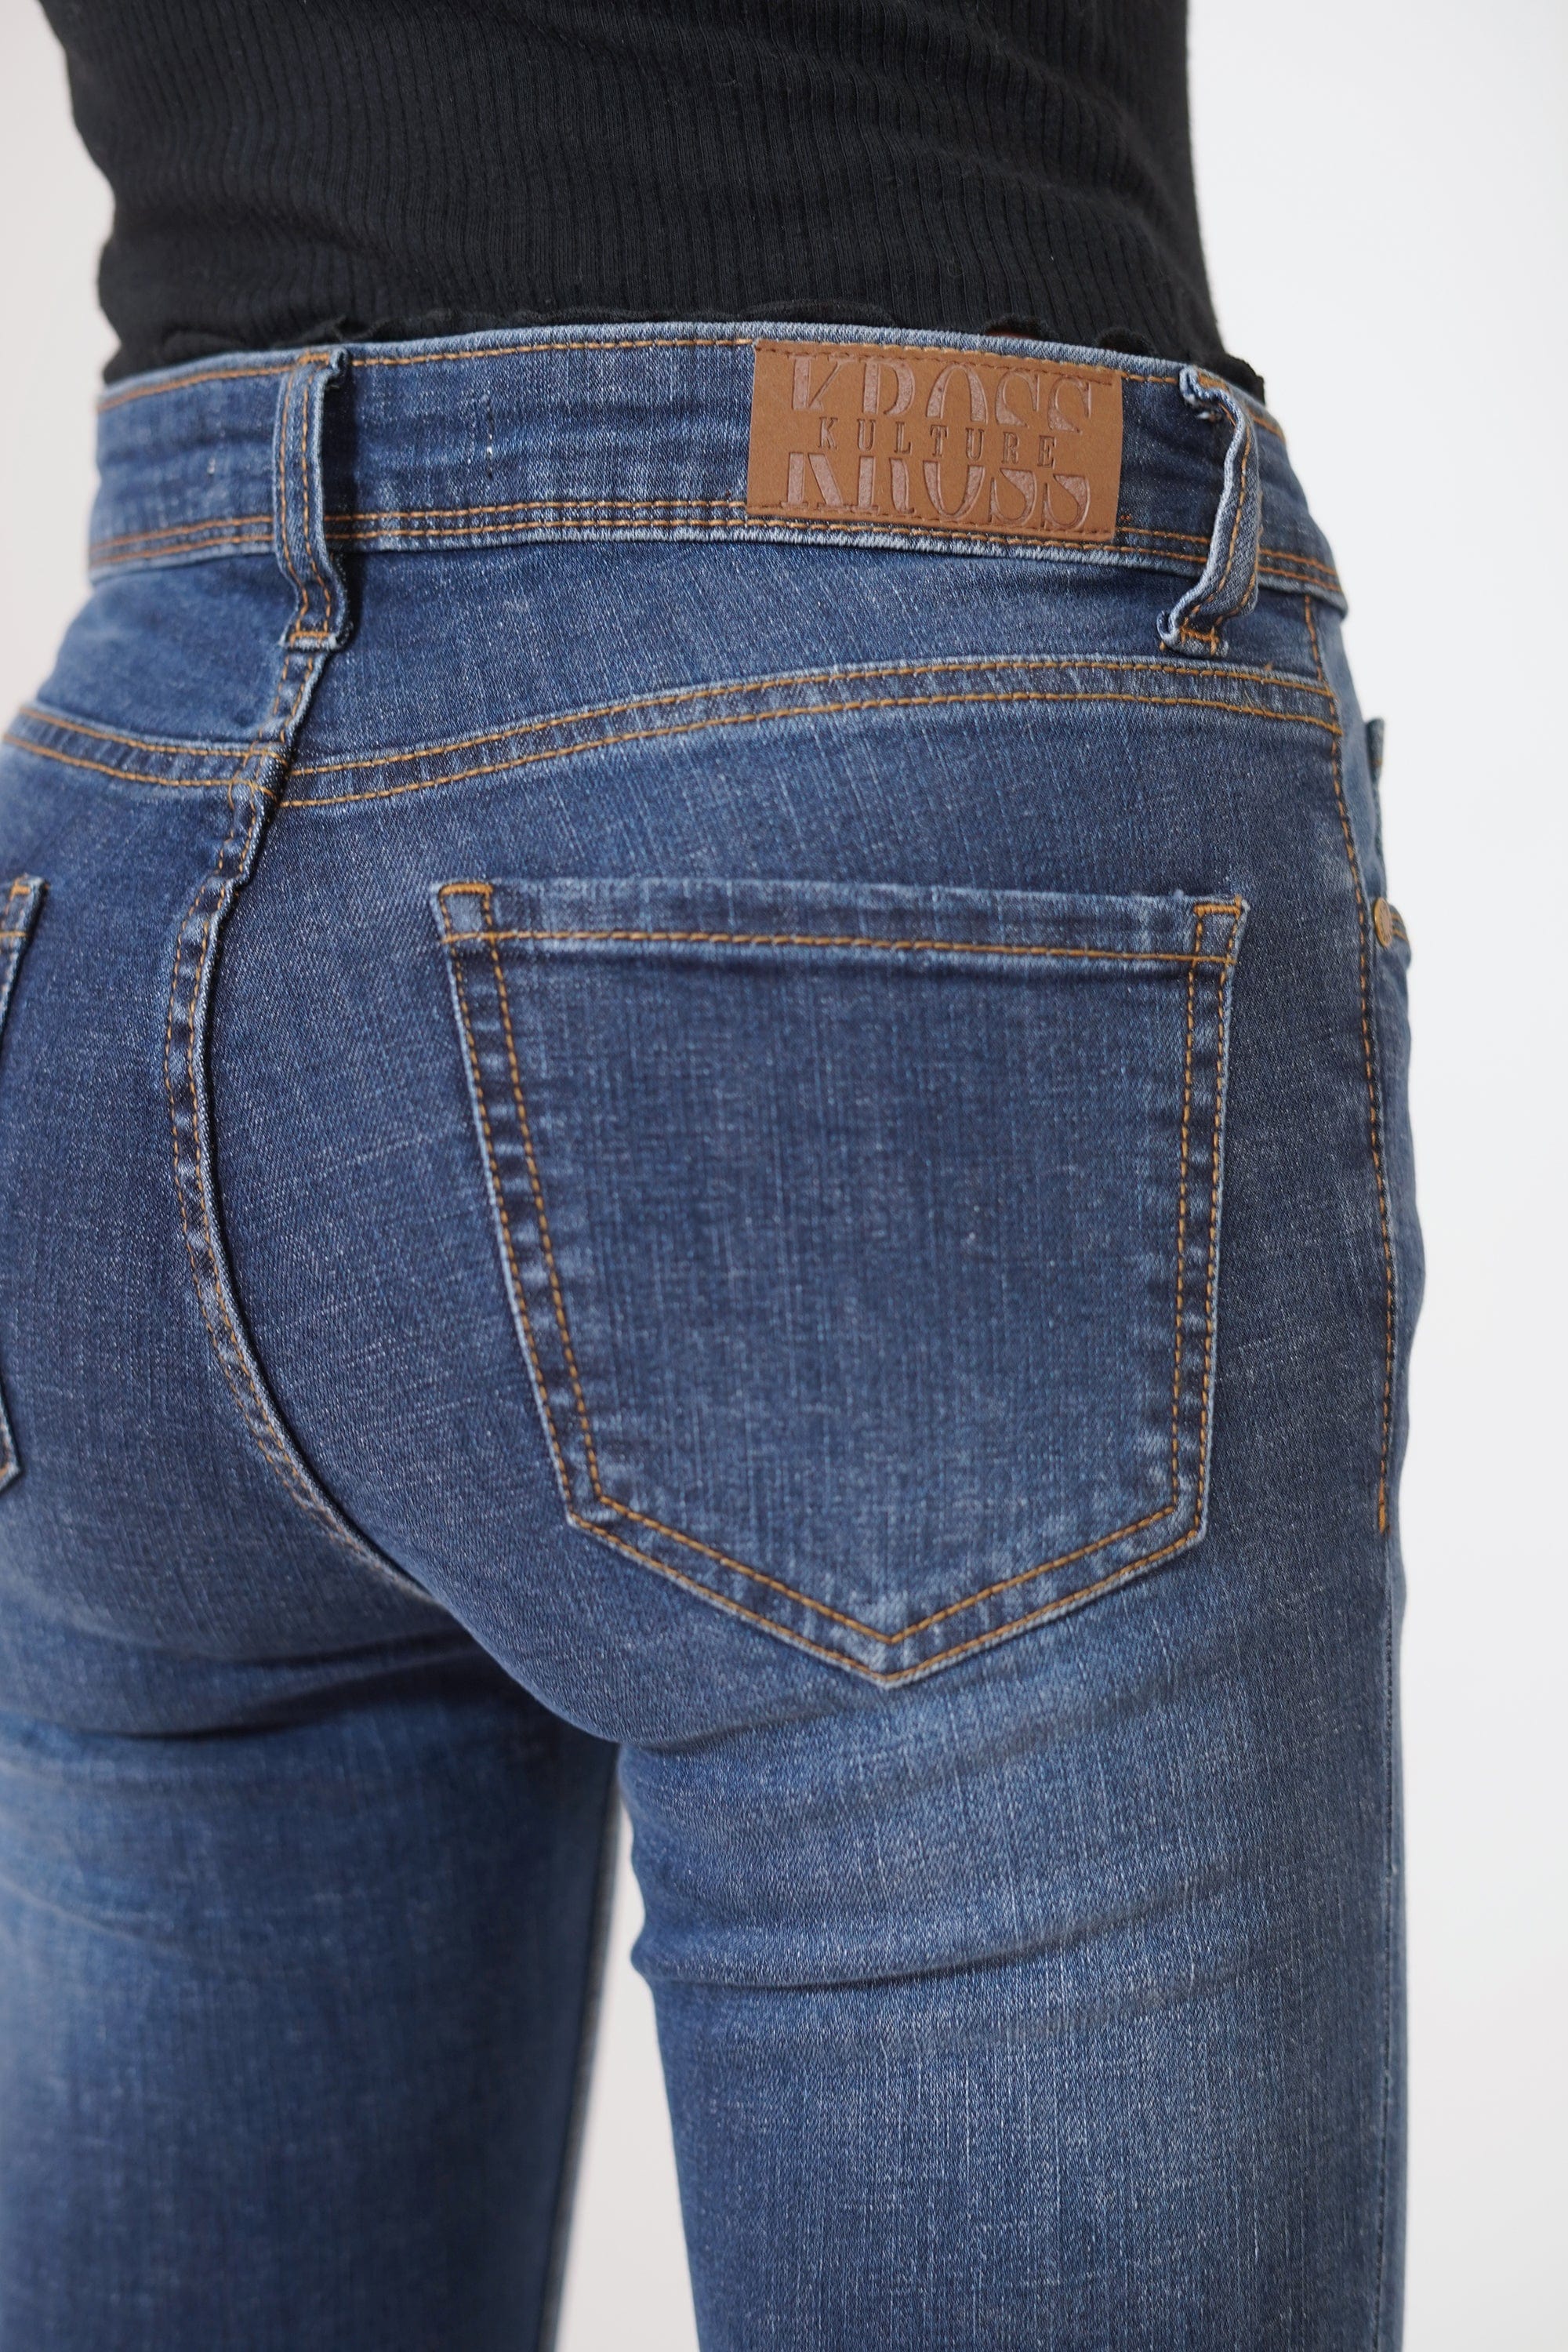 kross kulture  Bottom Jeans KWA-22-024